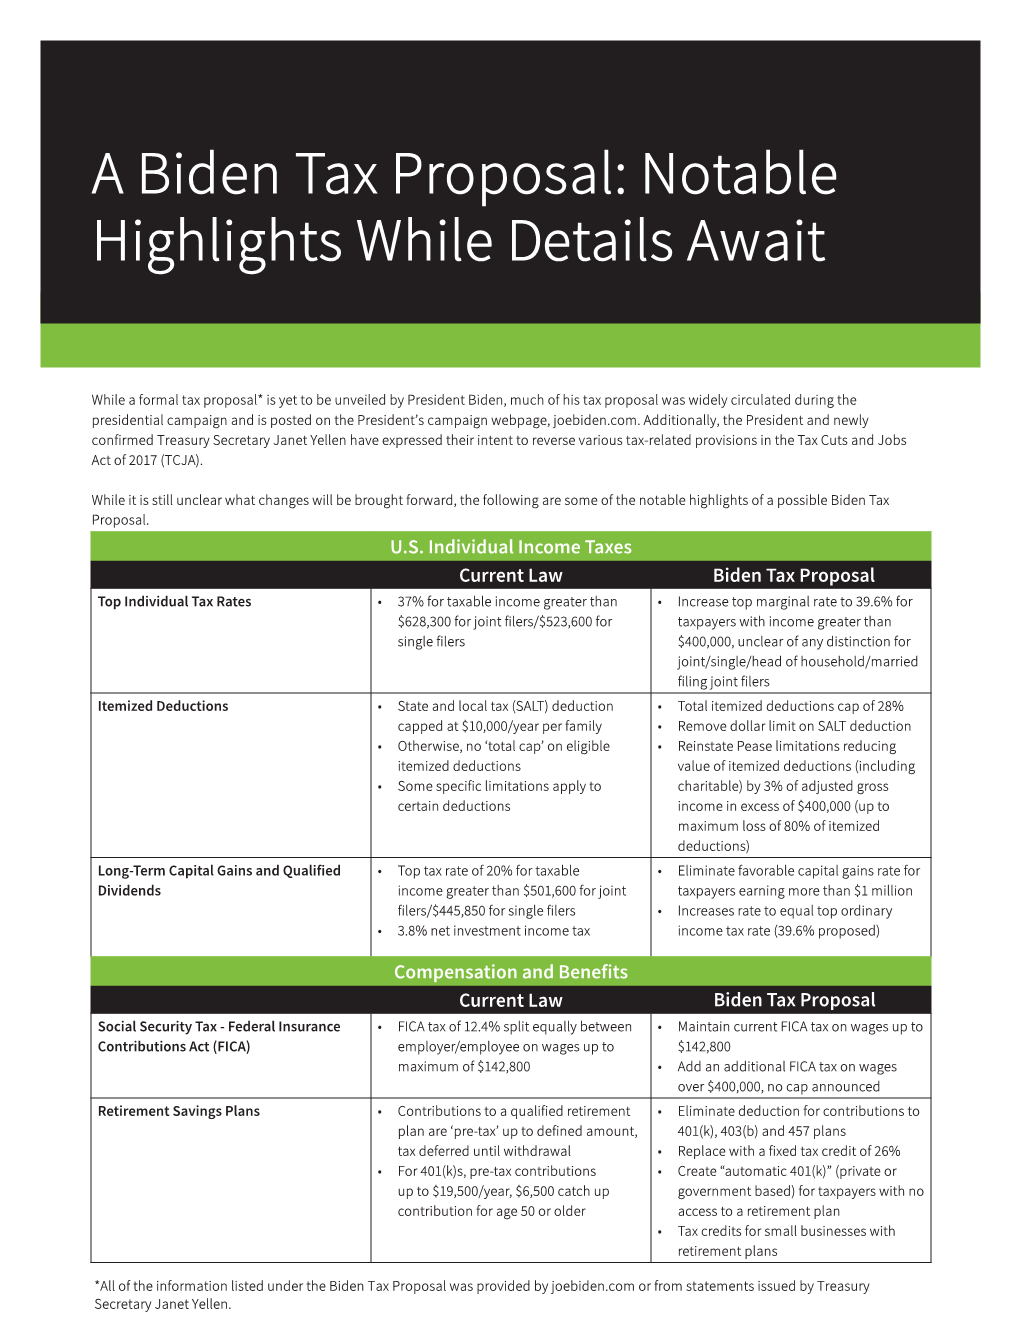 A Biden Tax Proposal: Notable Highlights While Details Await